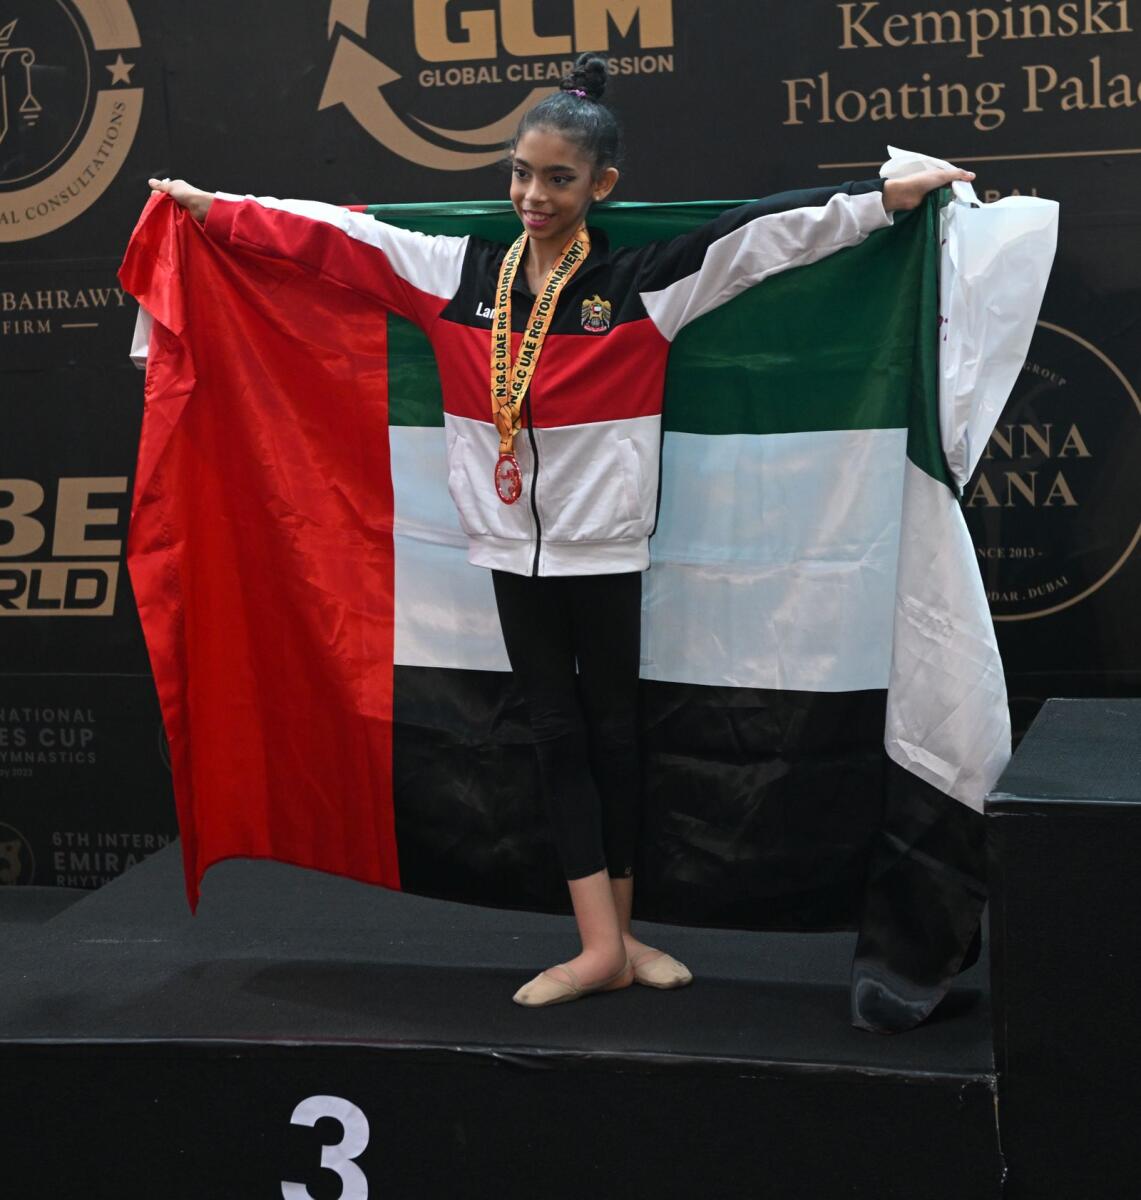 The UAE's Lamia Tariq Malallah celebrates on the podium. — Supplied photo